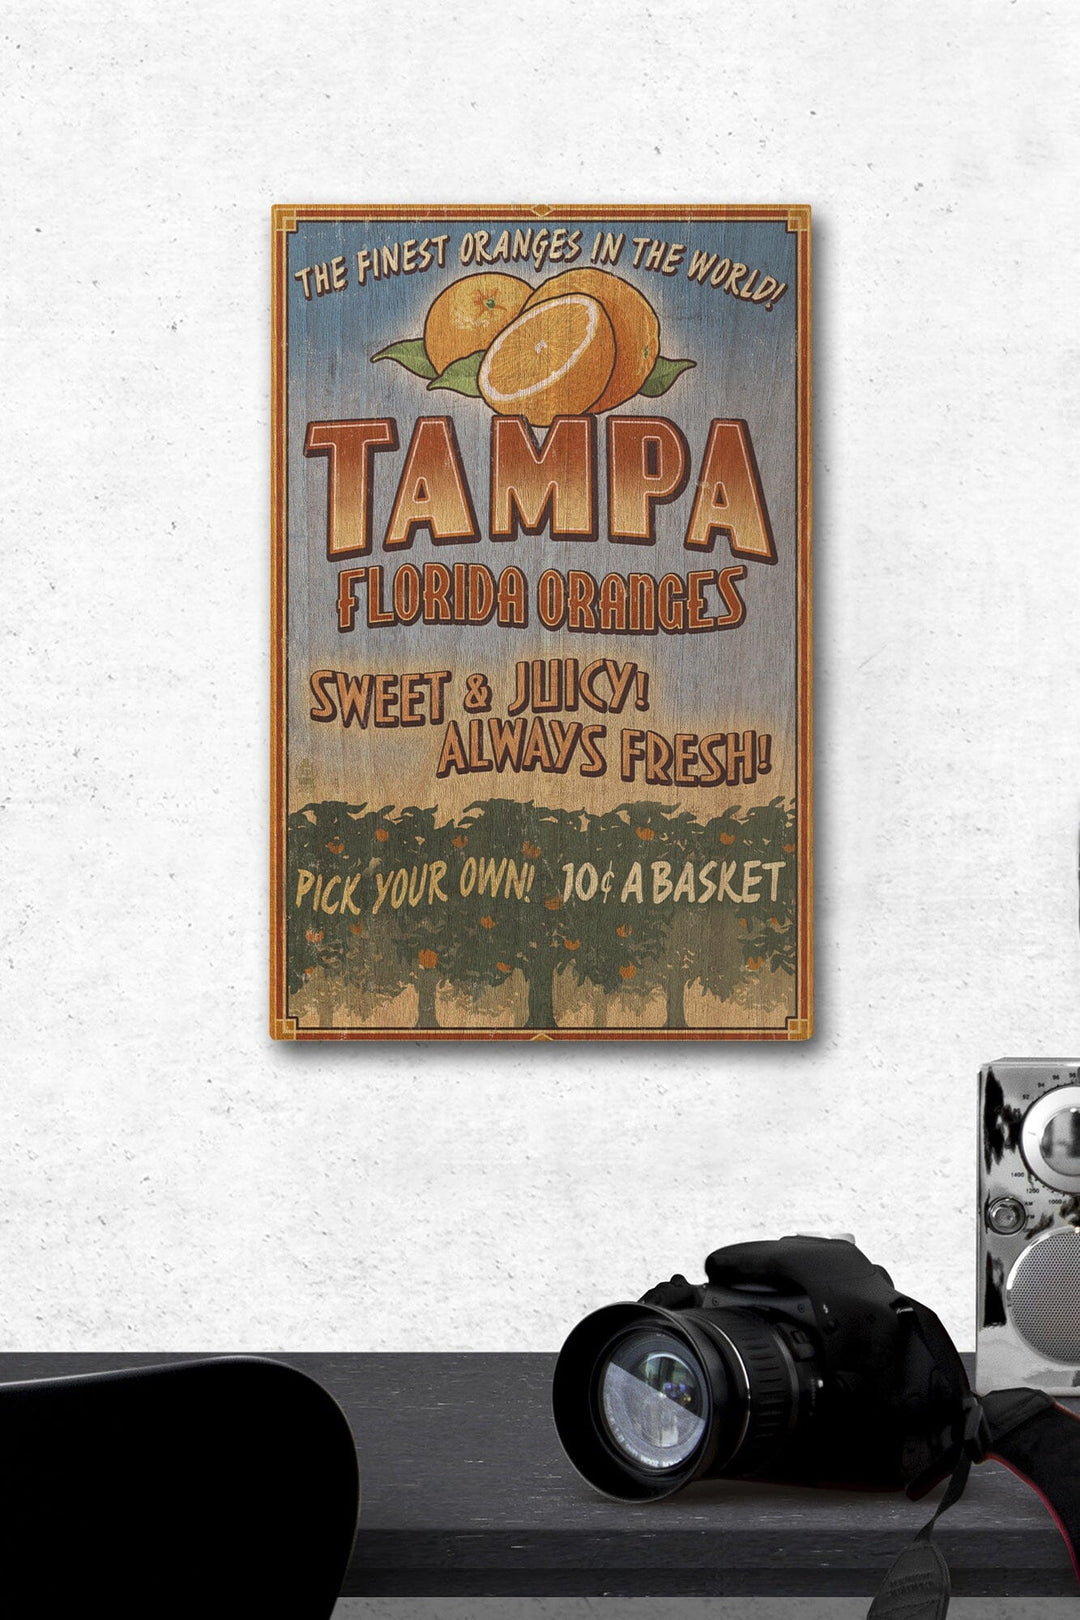 Tampa, Florida, Orange Grove Vintage Sign, Lantern Press Artwork, Wood Signs and Postcards Wood Lantern Press 12 x 18 Wood Gallery Print 